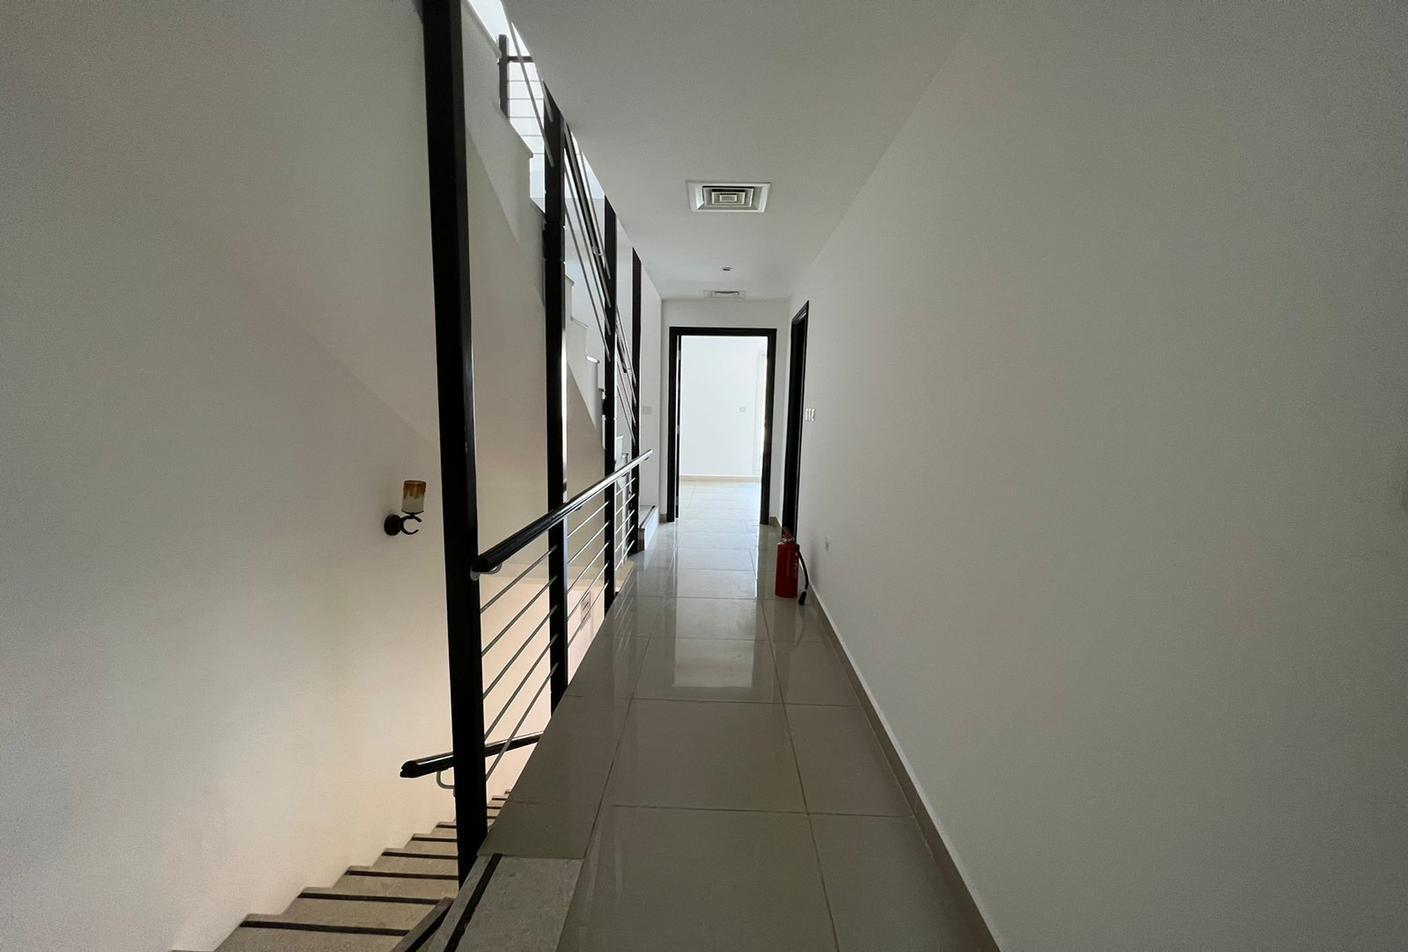 3 bed, 4 bath Villa for sale in Contemporary Style, Al Reef Villas, Al Reef, Abu Dhabi for price AED 1650000 